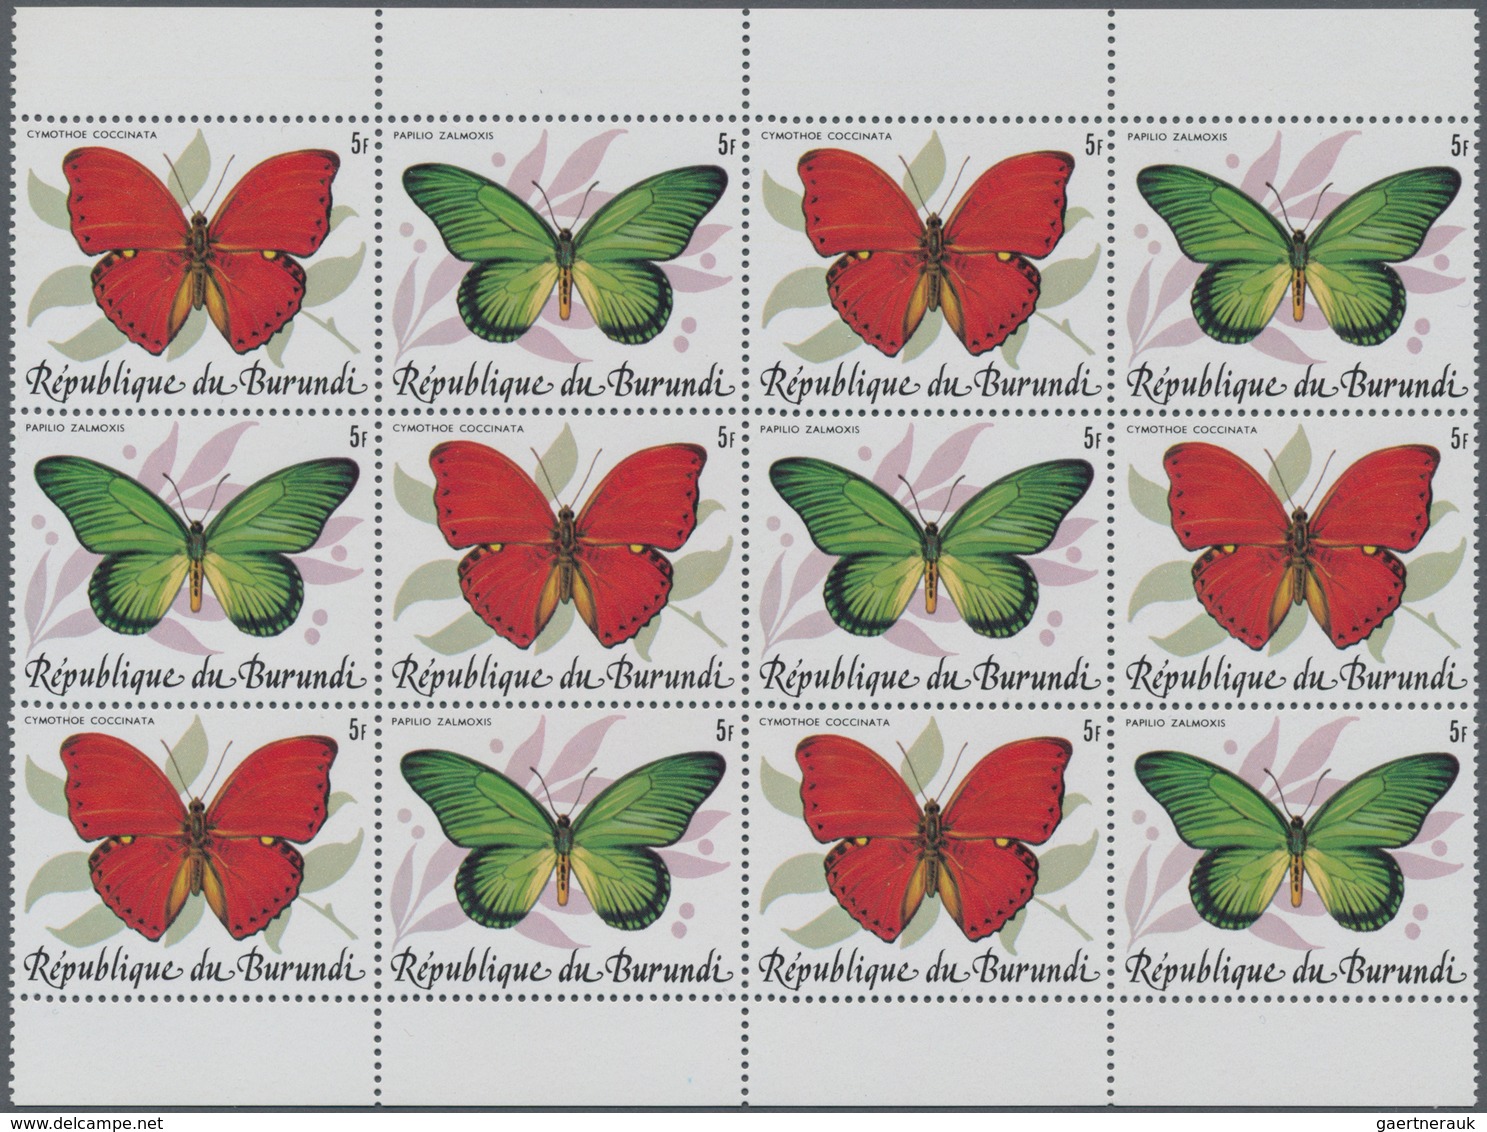 Burundi: 1984, Butterflies complete set of 10 in se-tenant pairs in blocks of 12 (six sets), mint ne